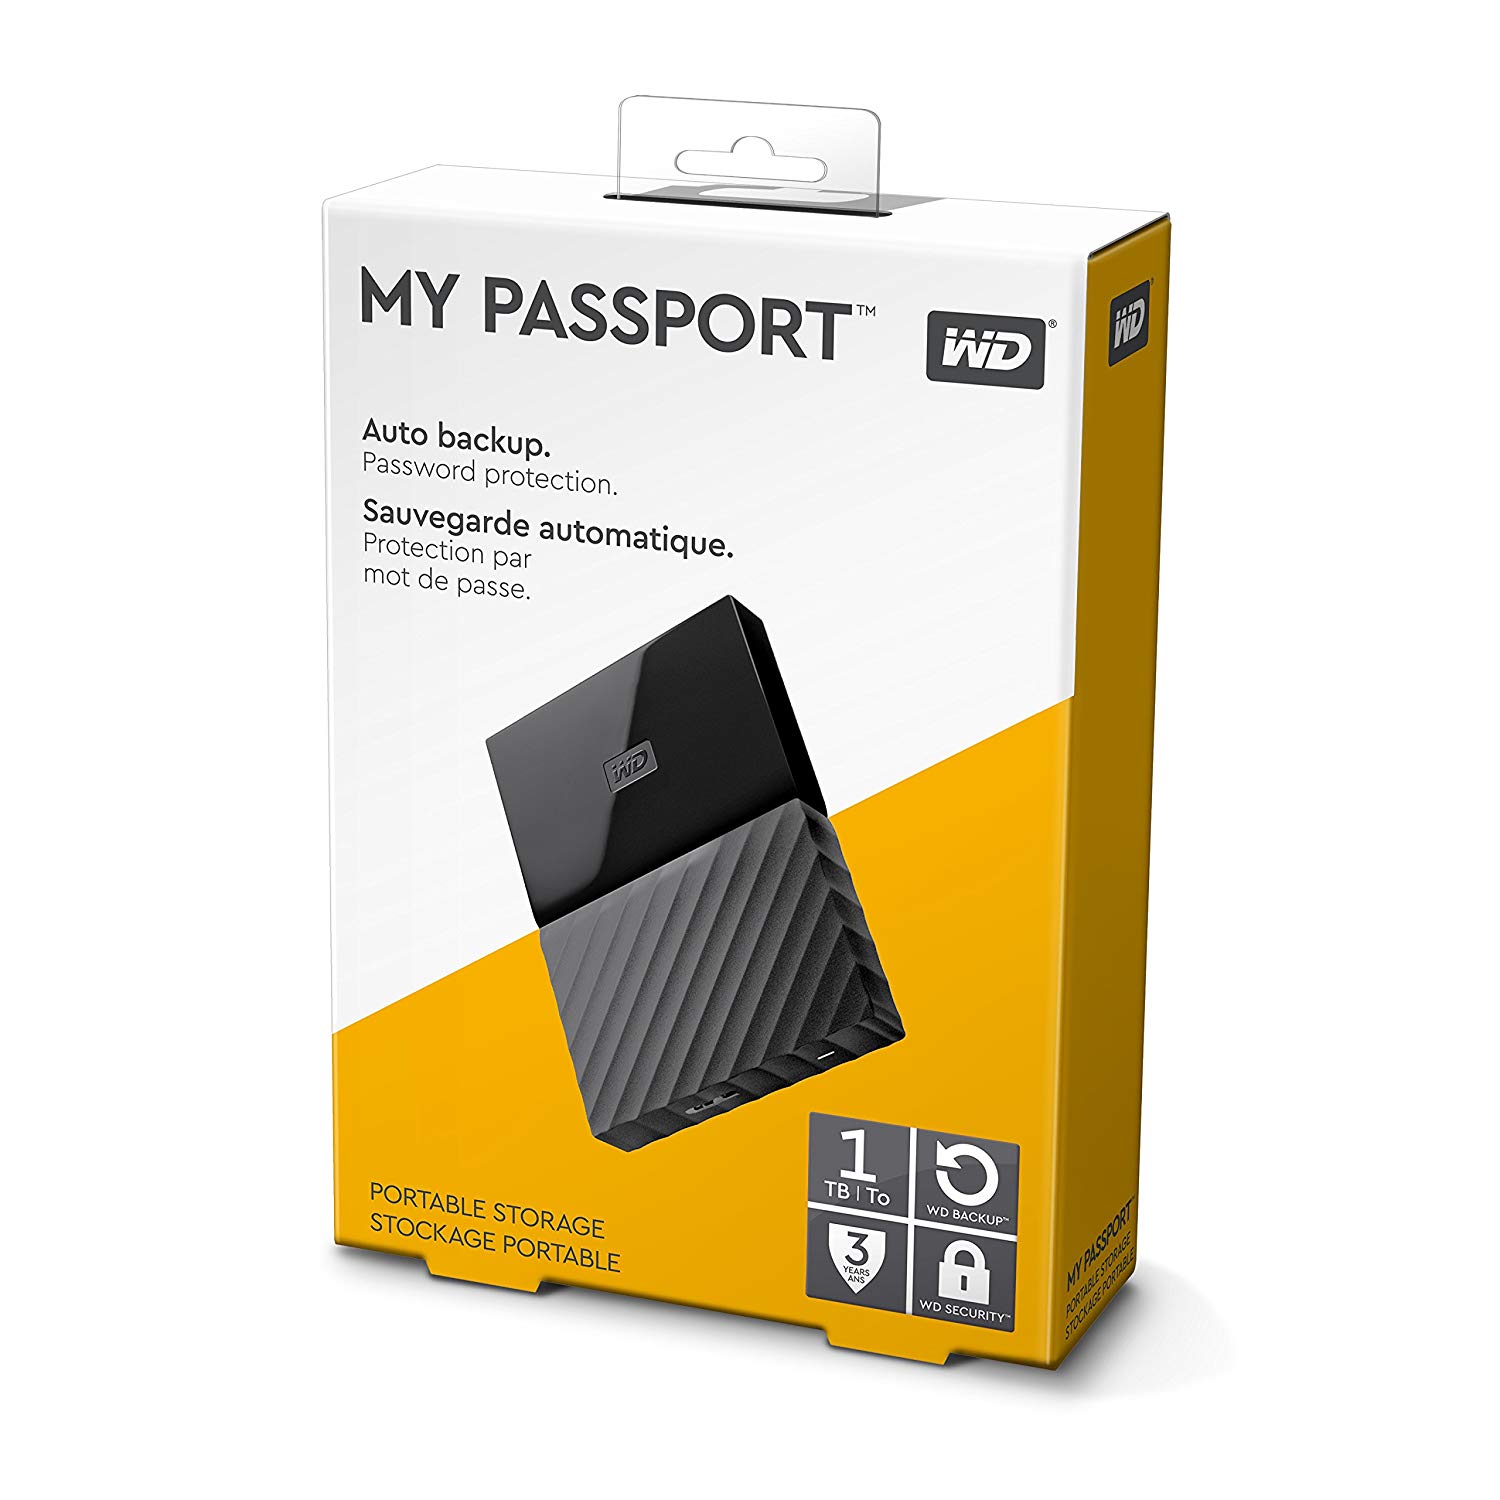 how to unlock wd my passport external hard drive